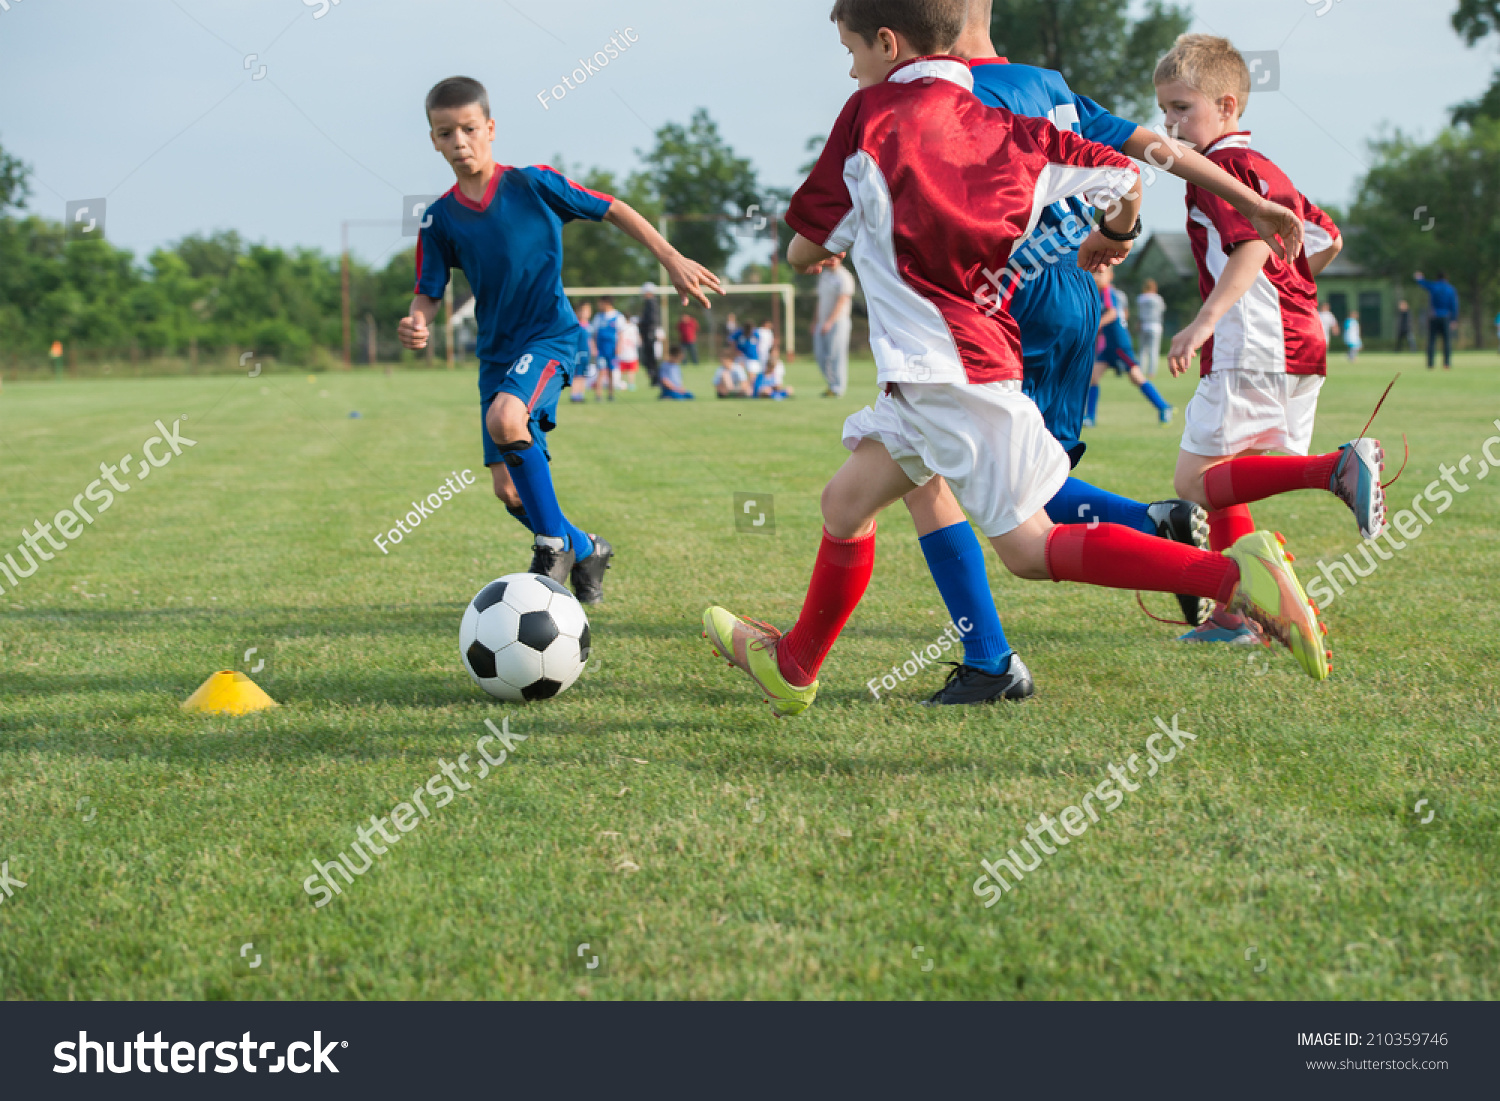 boys kicking football on the sports field #210359746